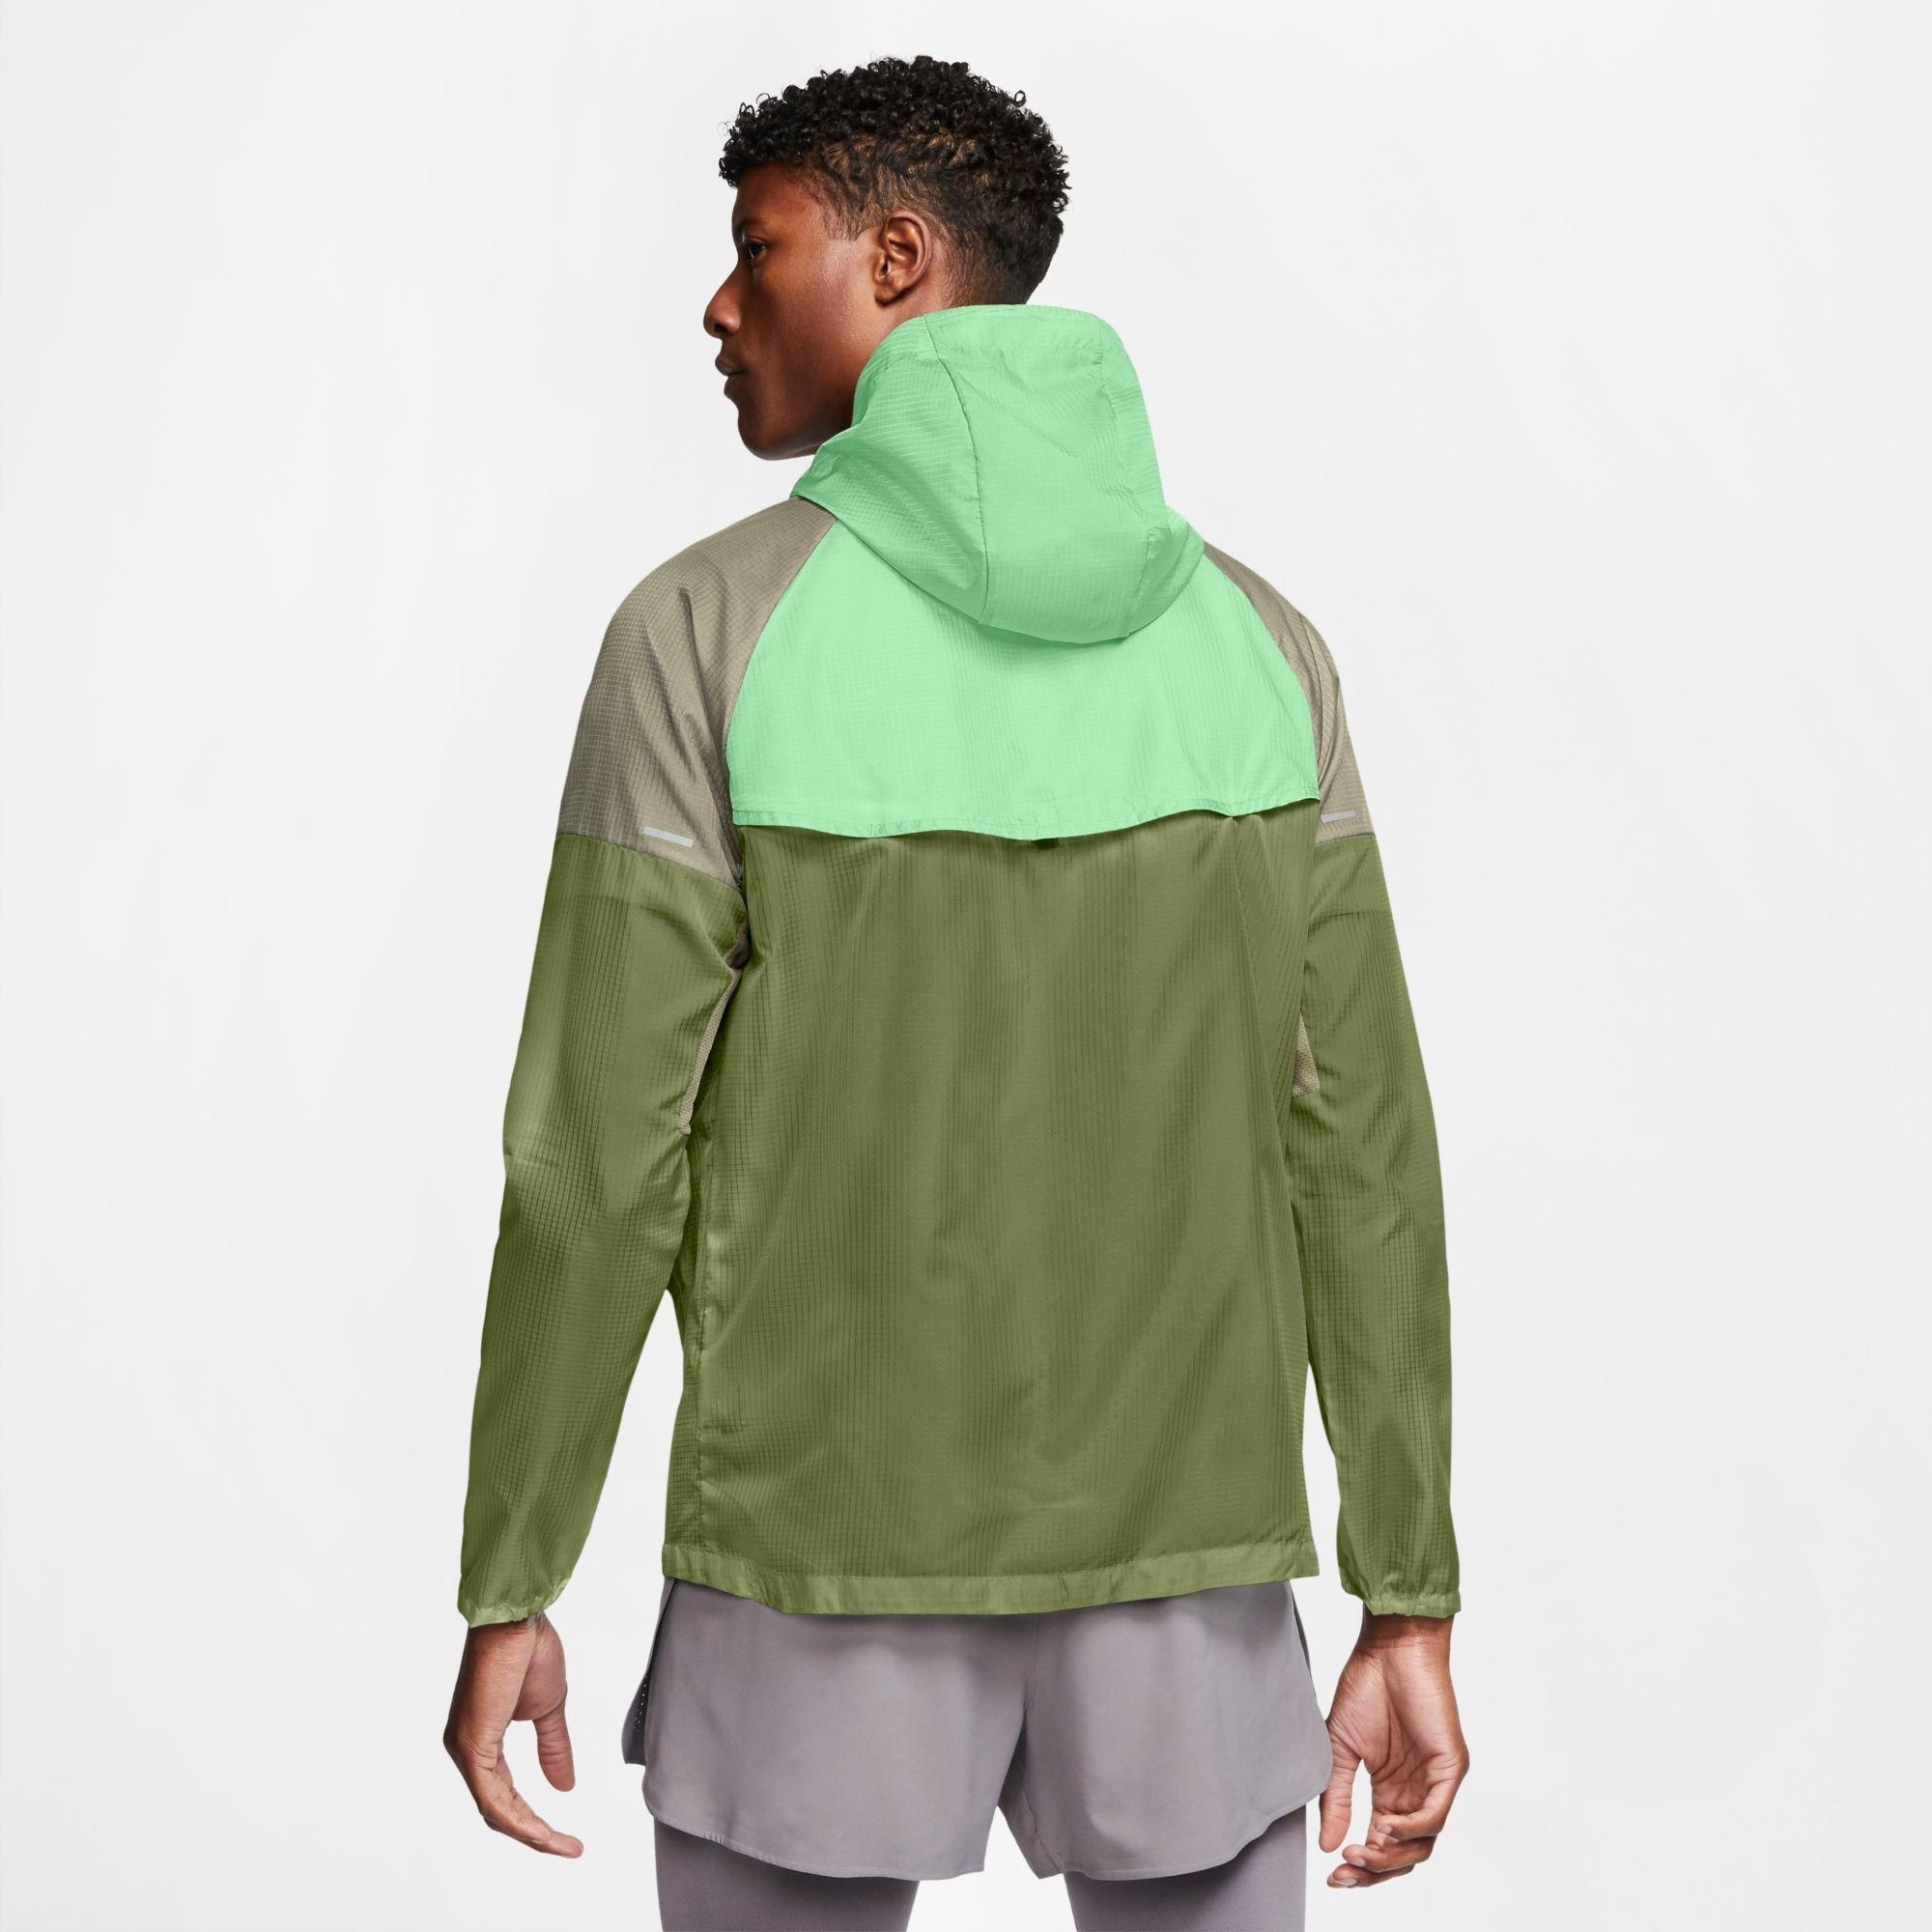 khaki green nike jacket